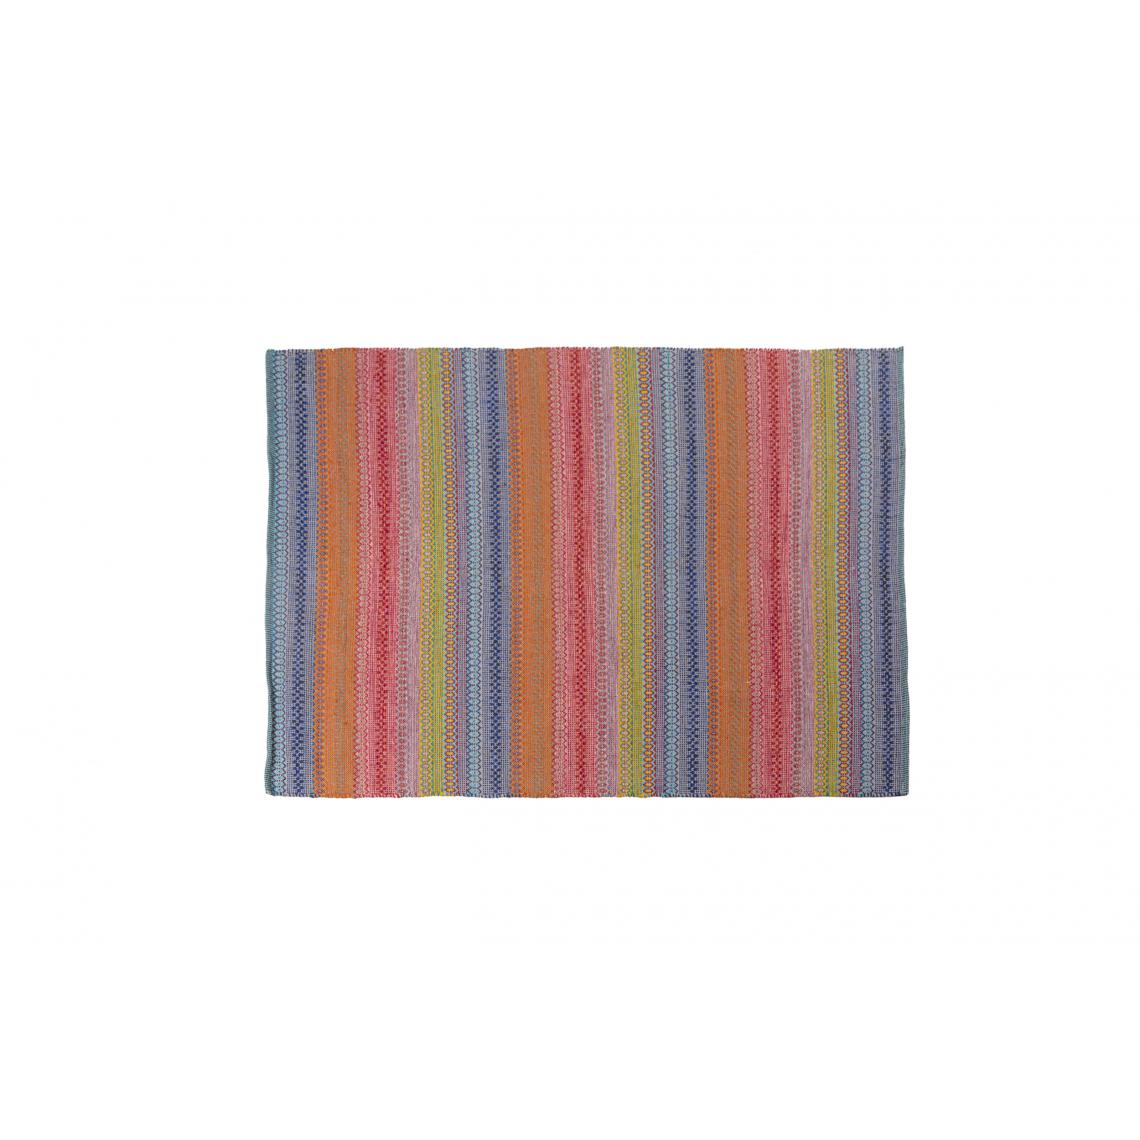 Alter - Tapis moderne Cleveland, style kilim, 100% coton, multicolore, 200x140cm - Tapis